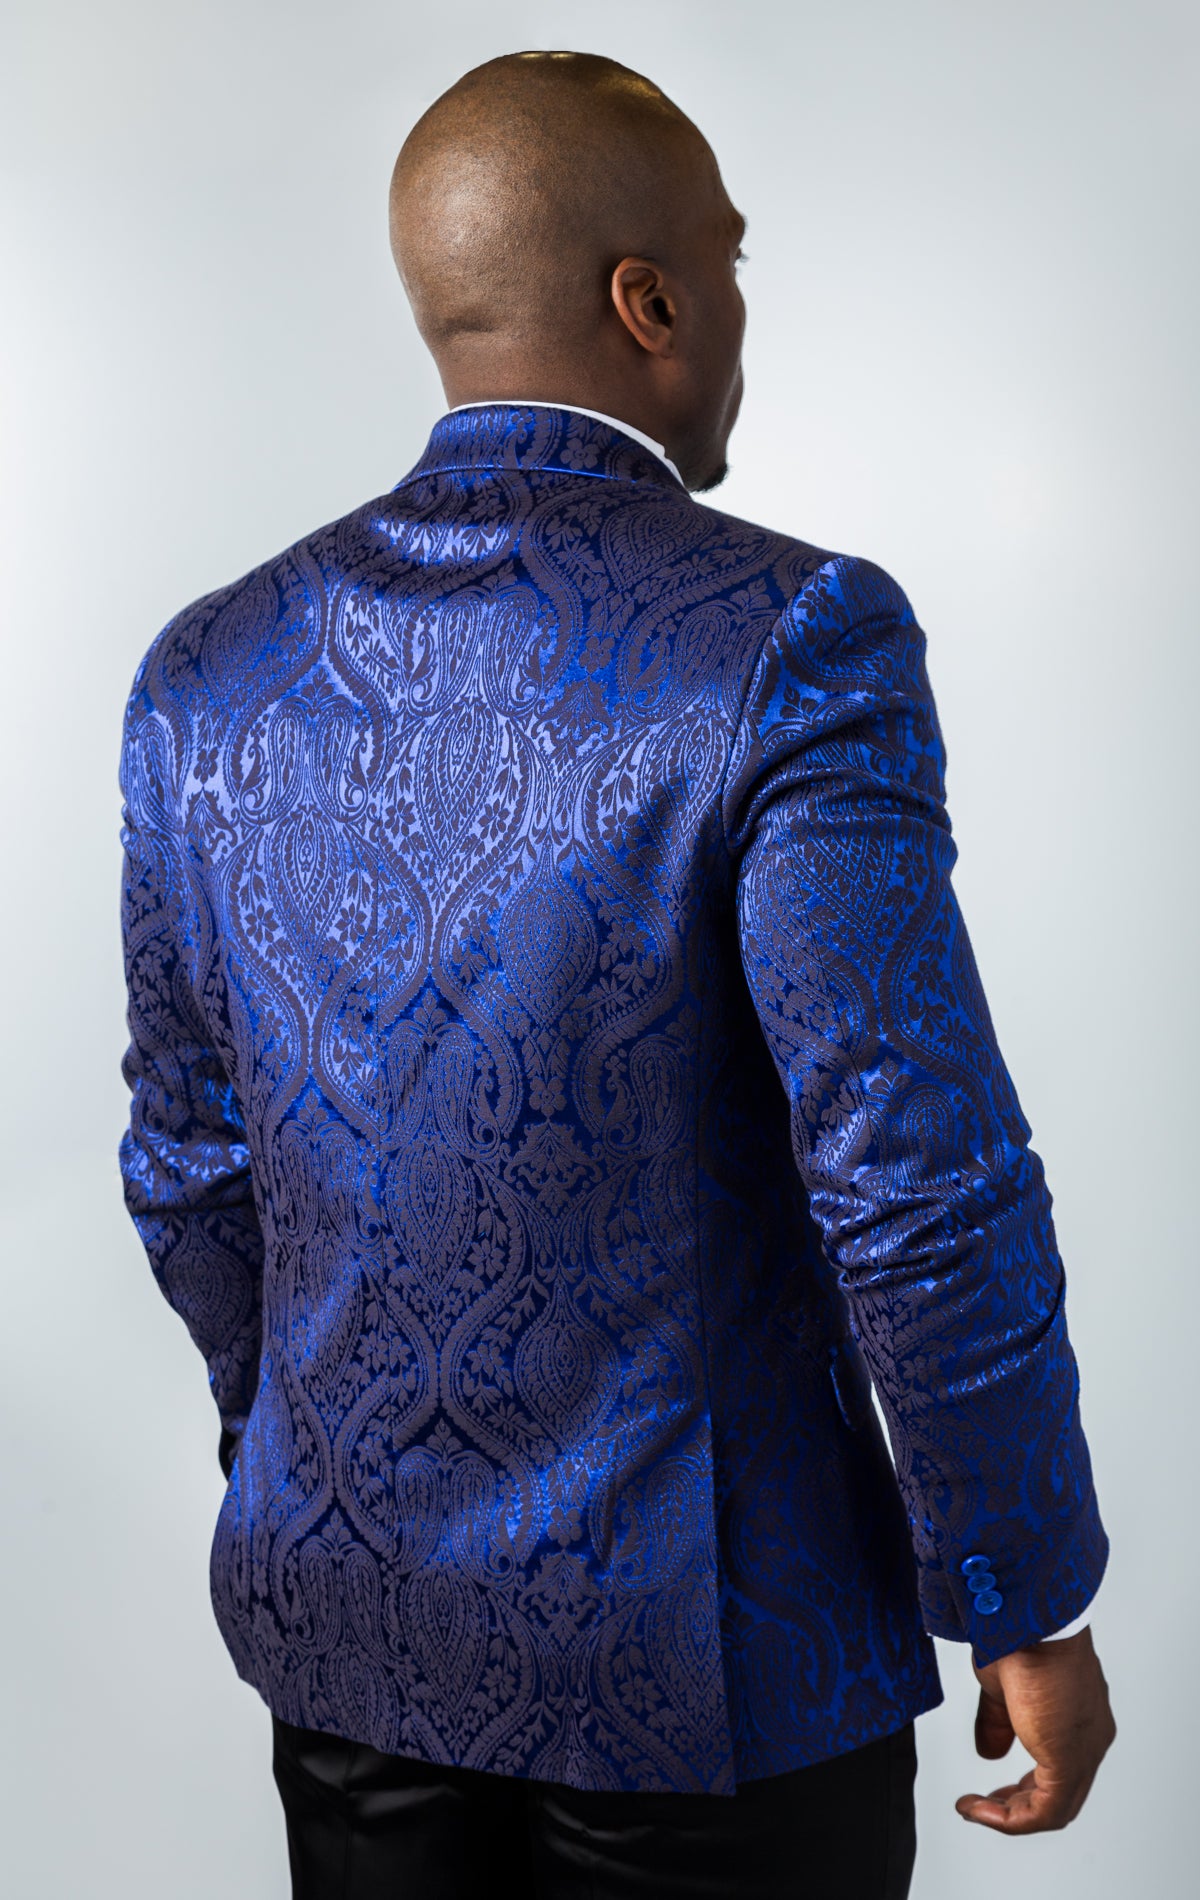 Royal blue tux jacket with vintage pattern